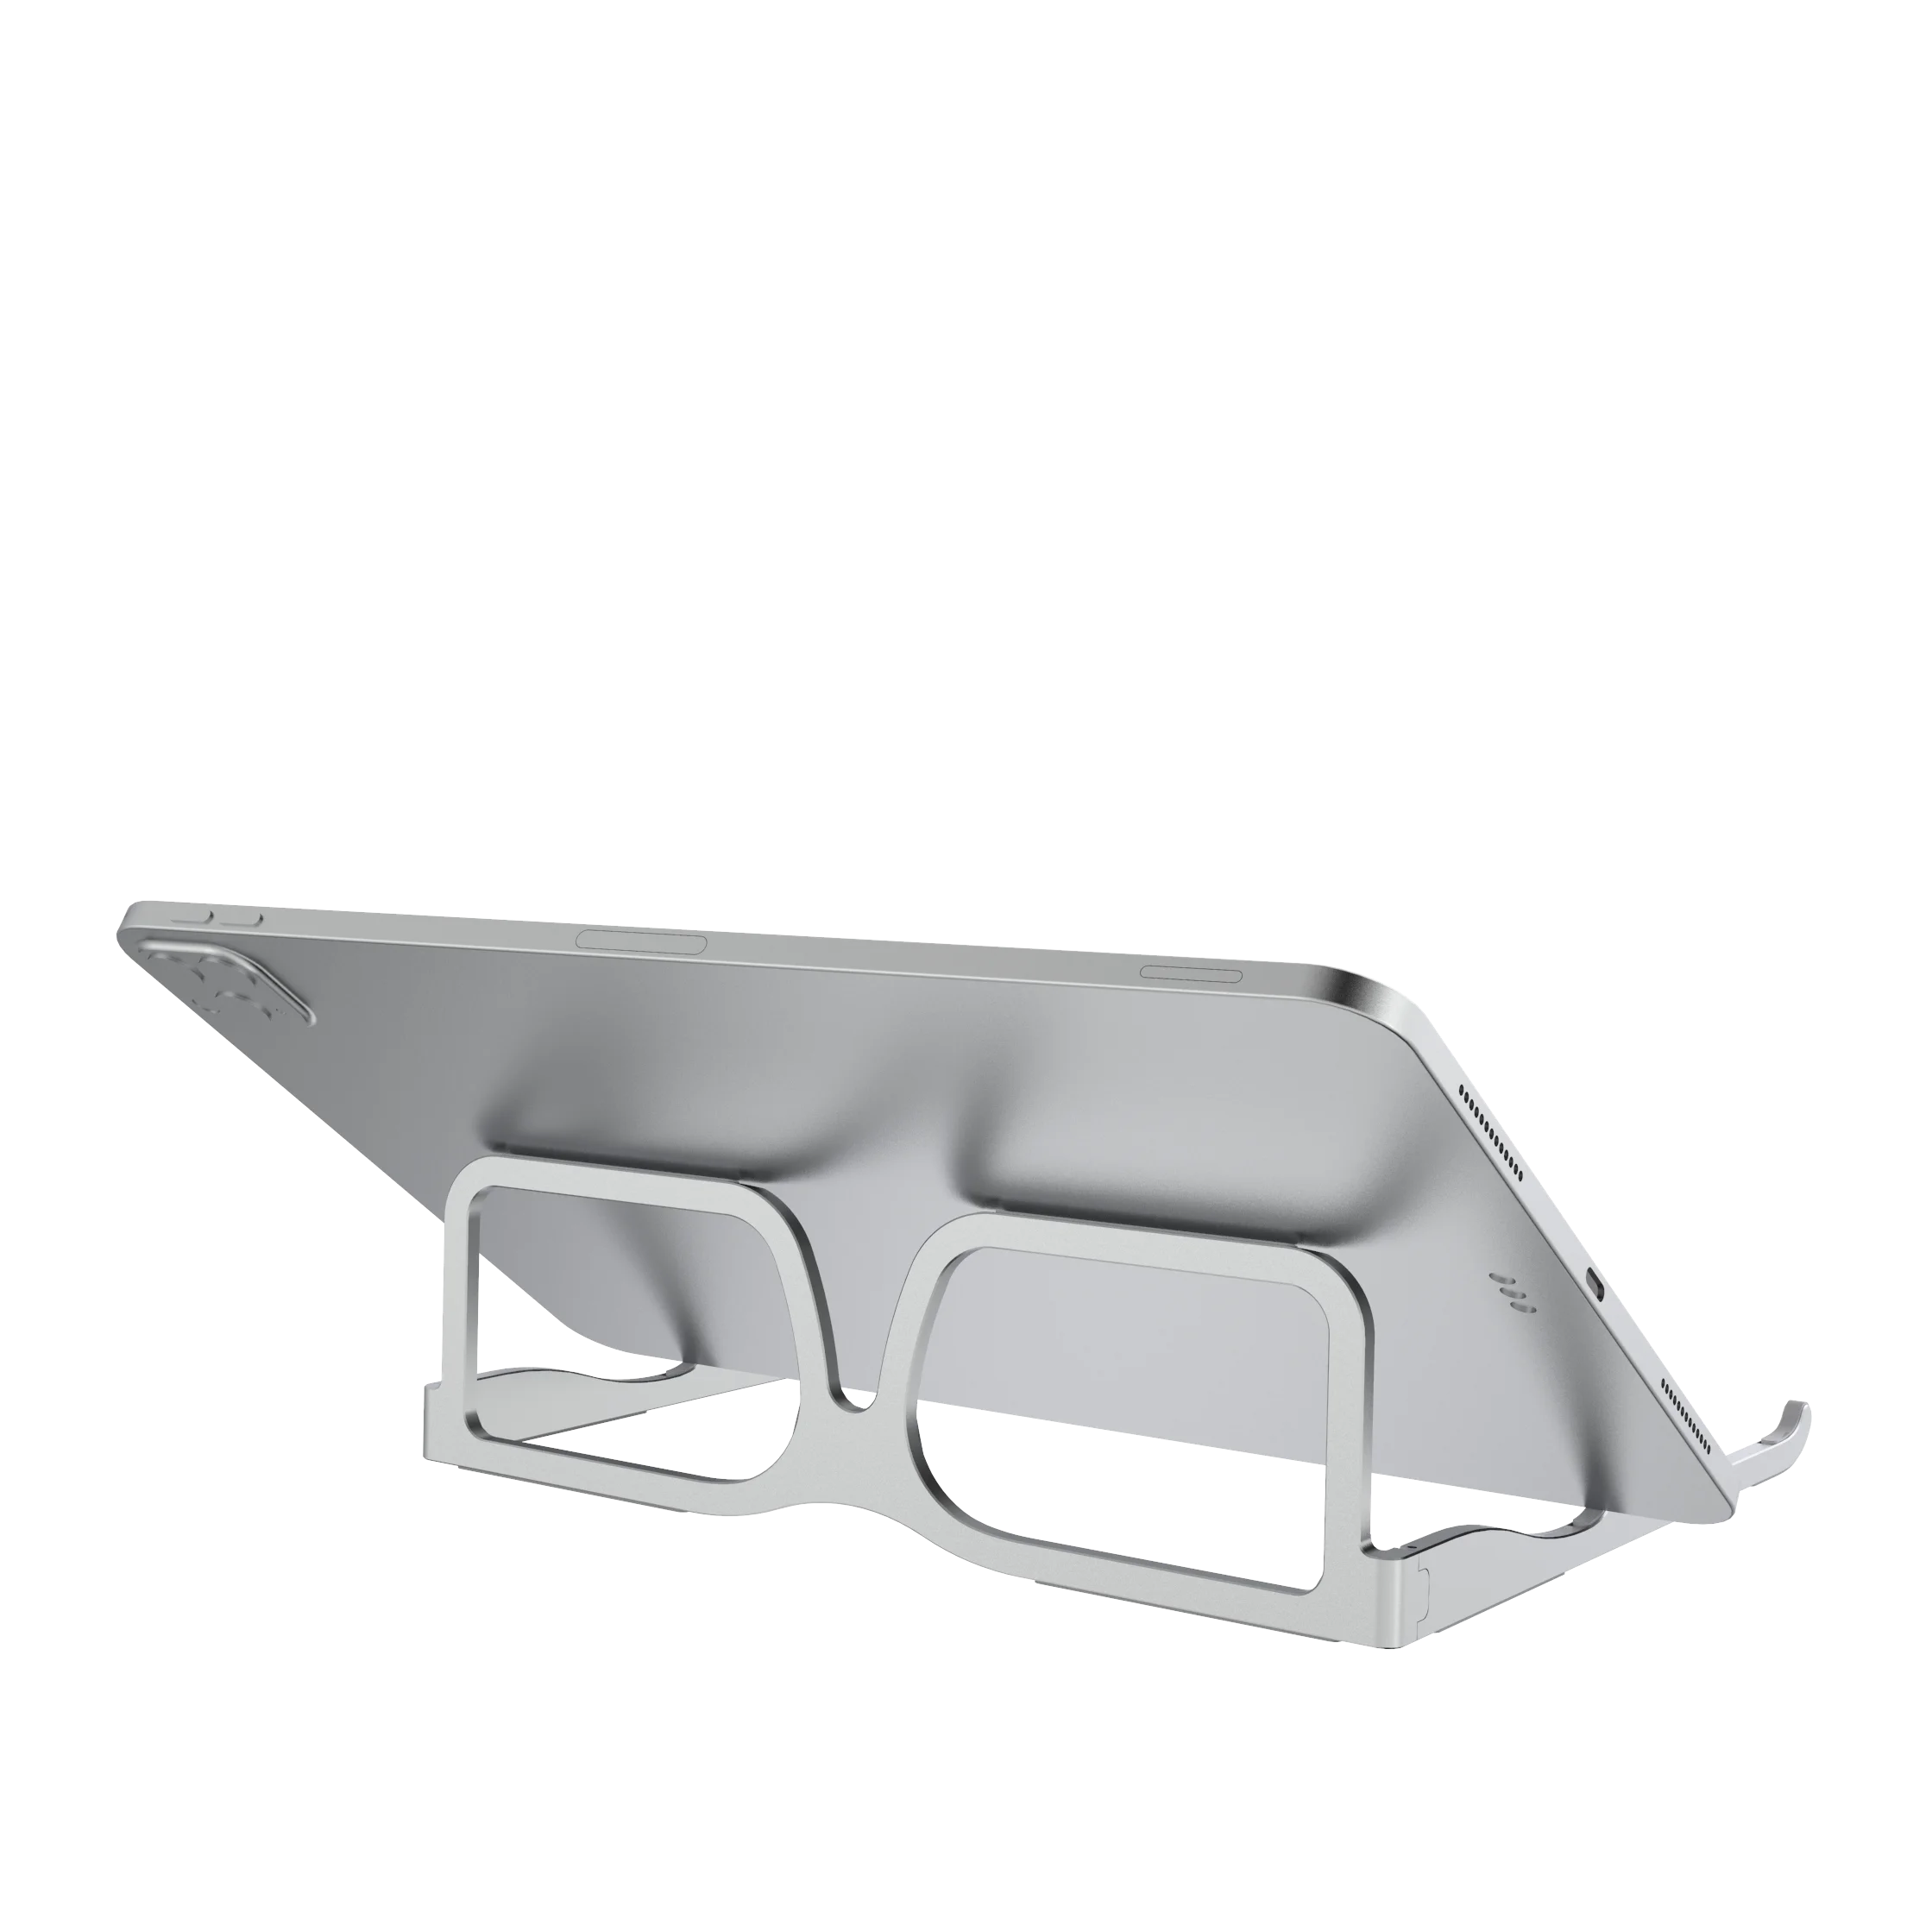 2020 Hot Sell Portable Glasses Shape Cool design Foldable Laptop stand Aluminum